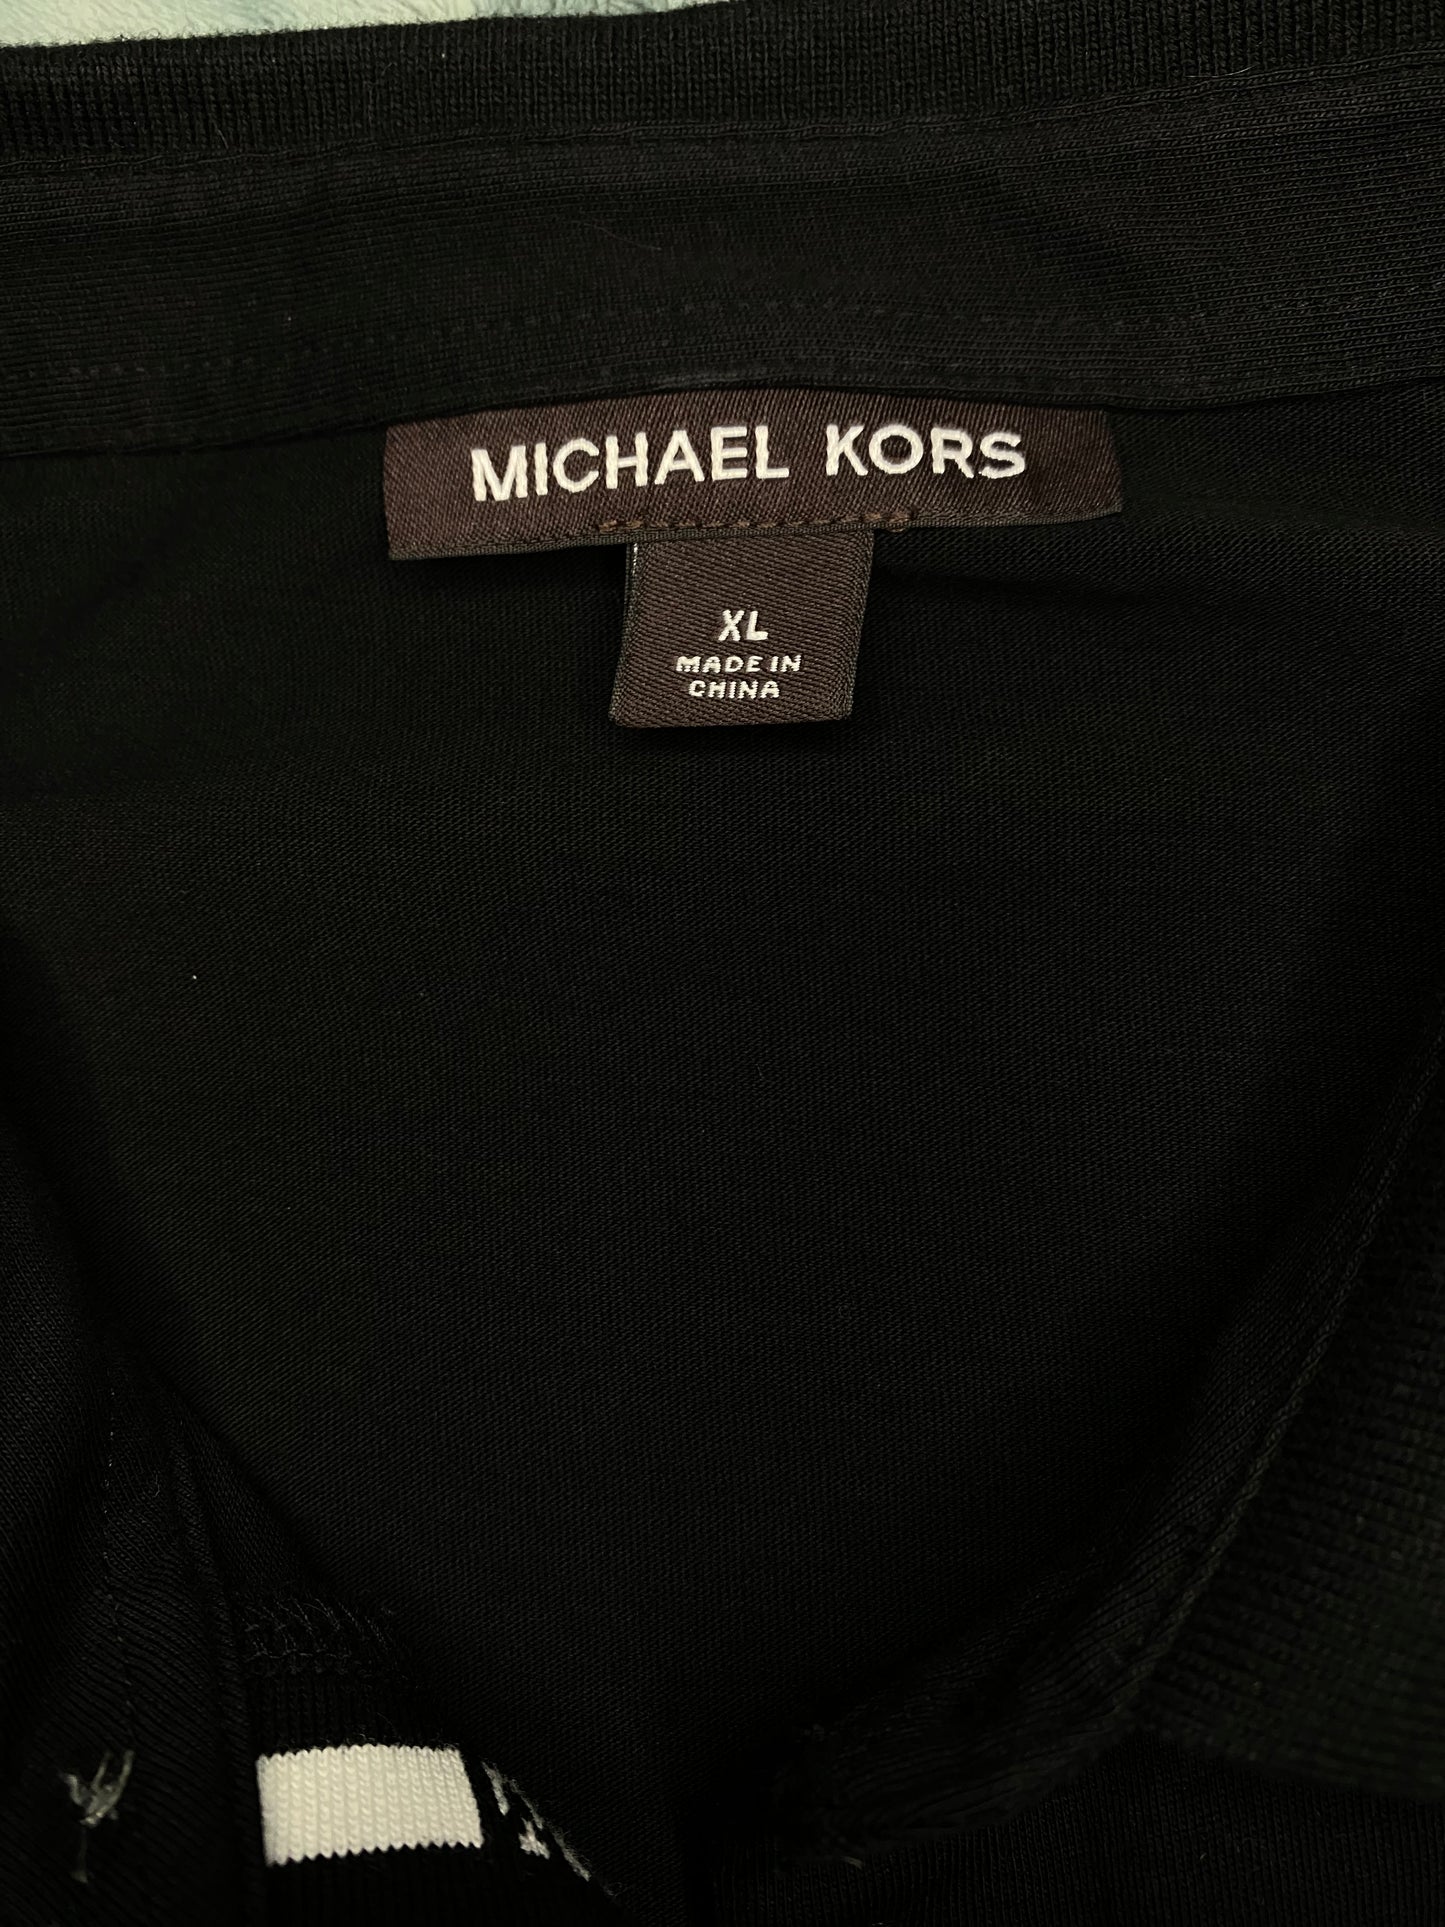 Michael Kors Collared Shirt